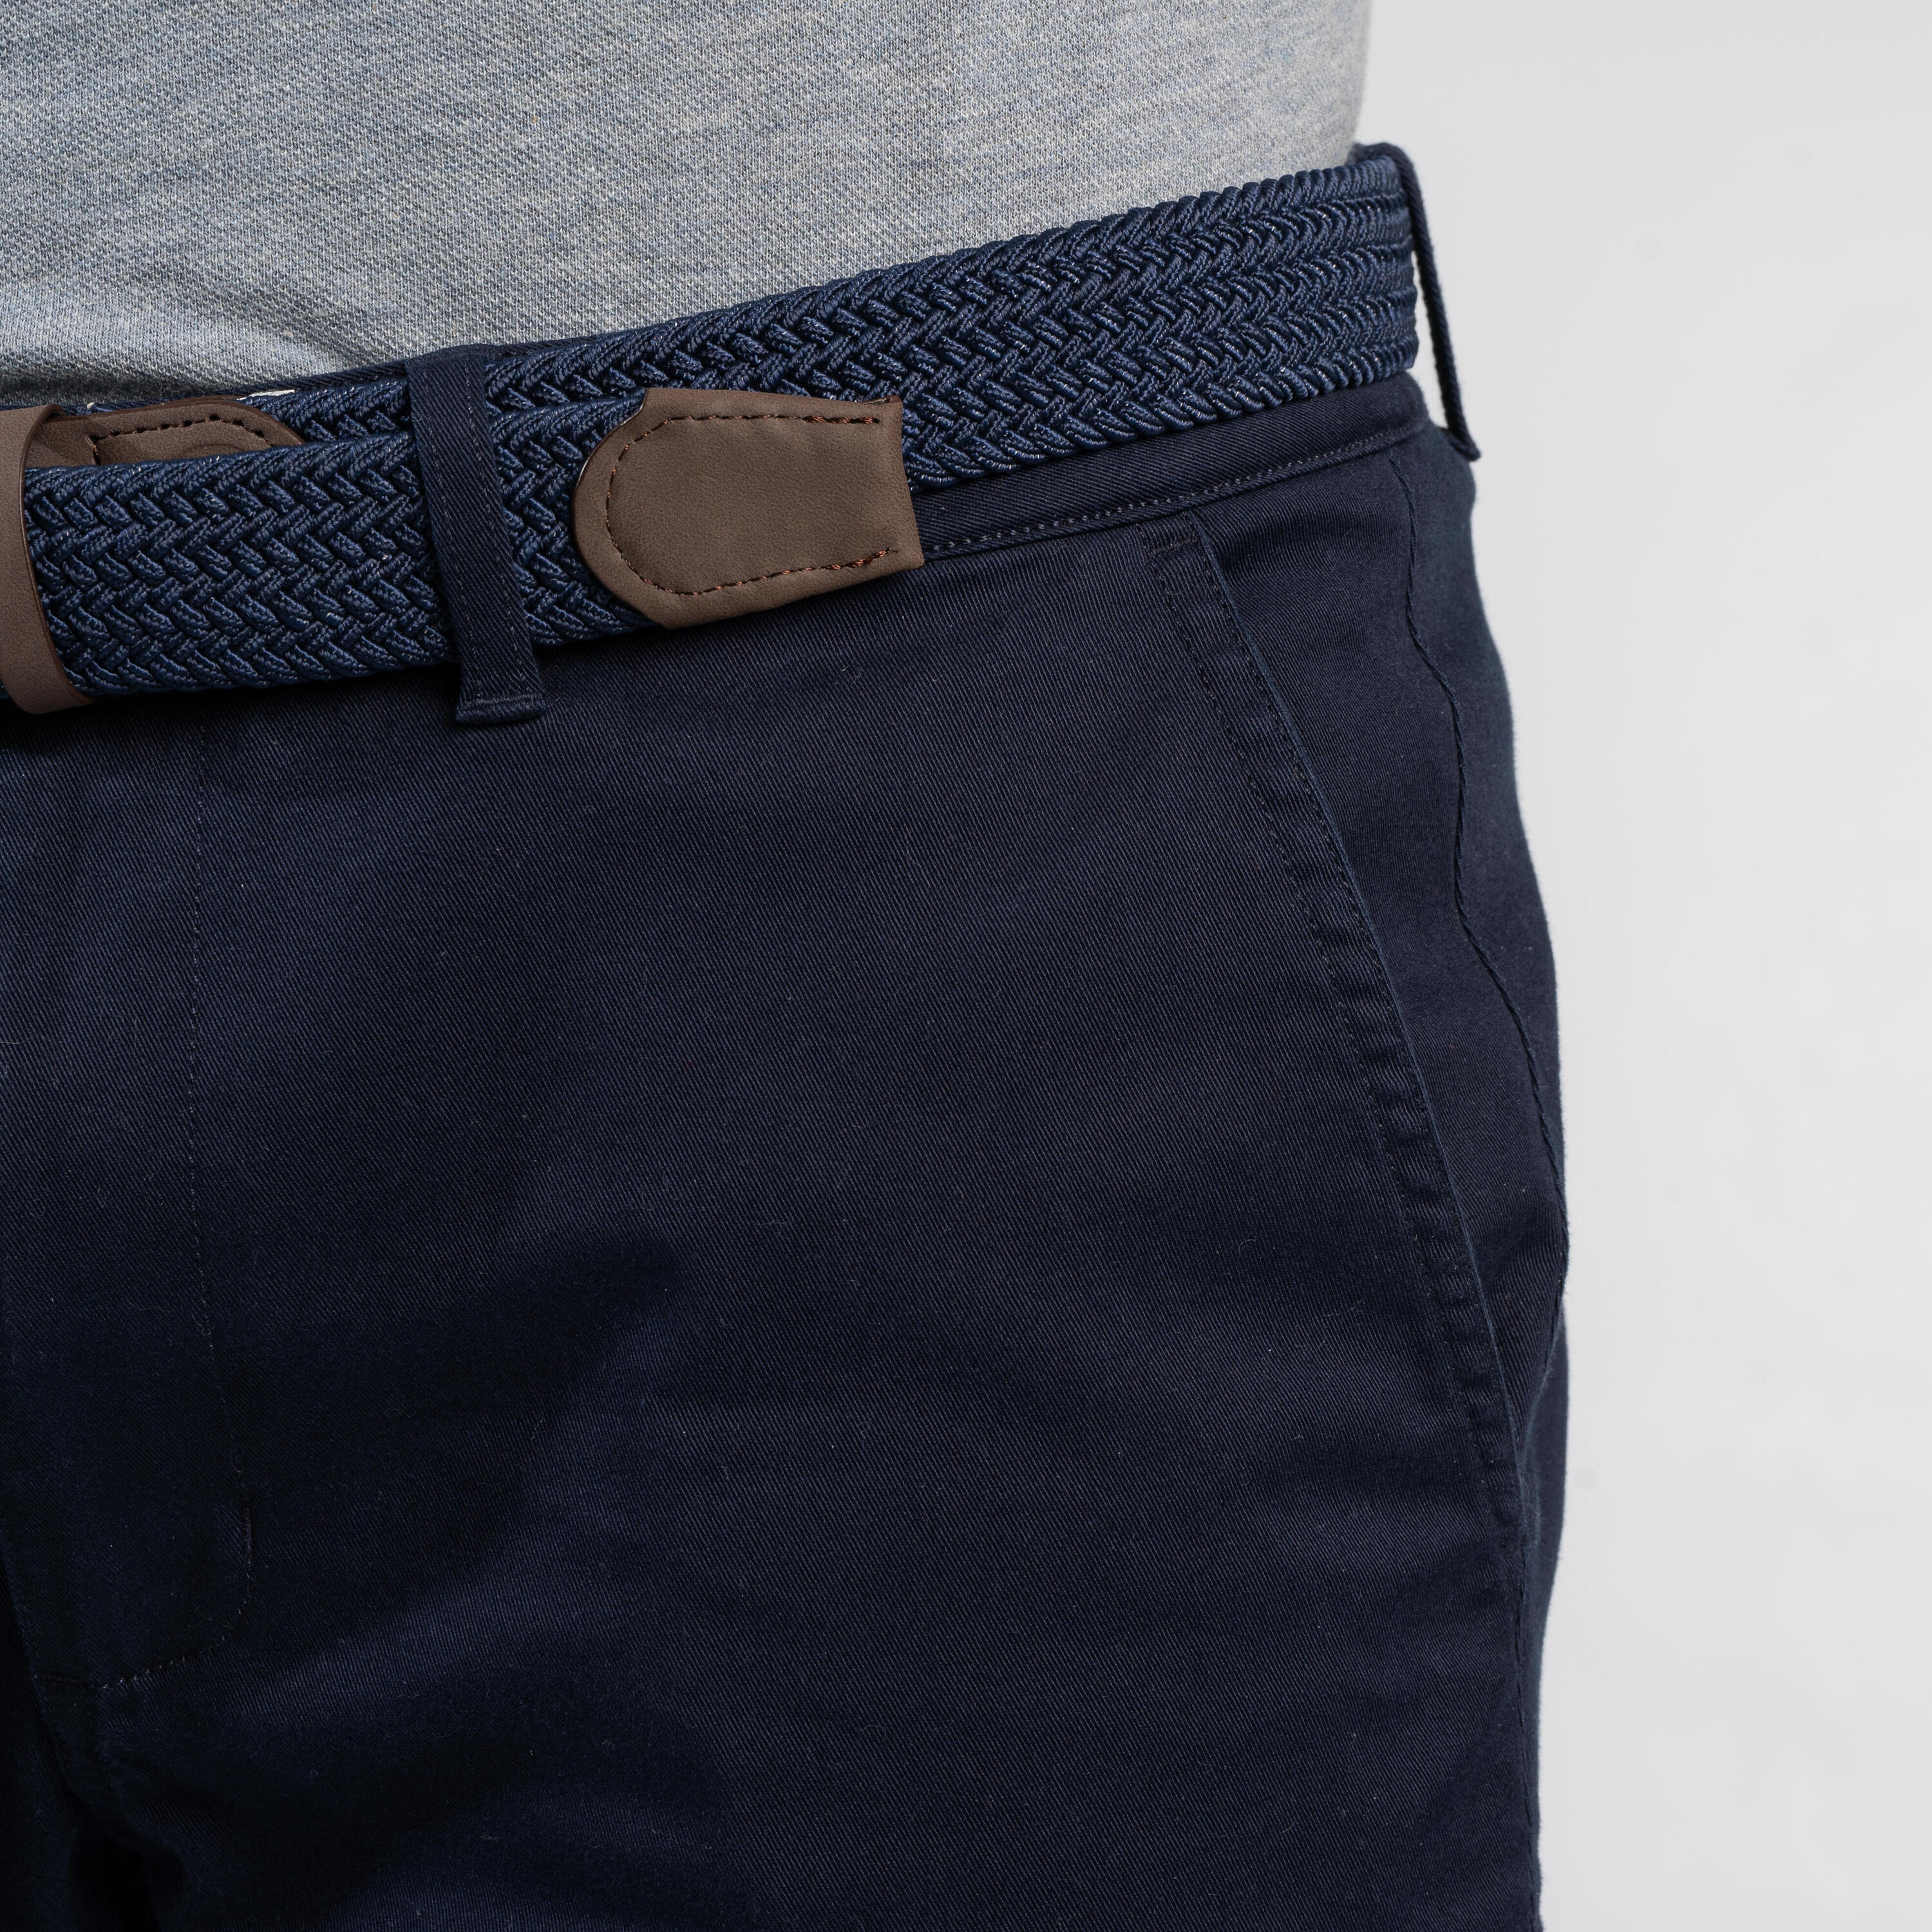 Men's golf trousers - MW500 navy blue 4/6